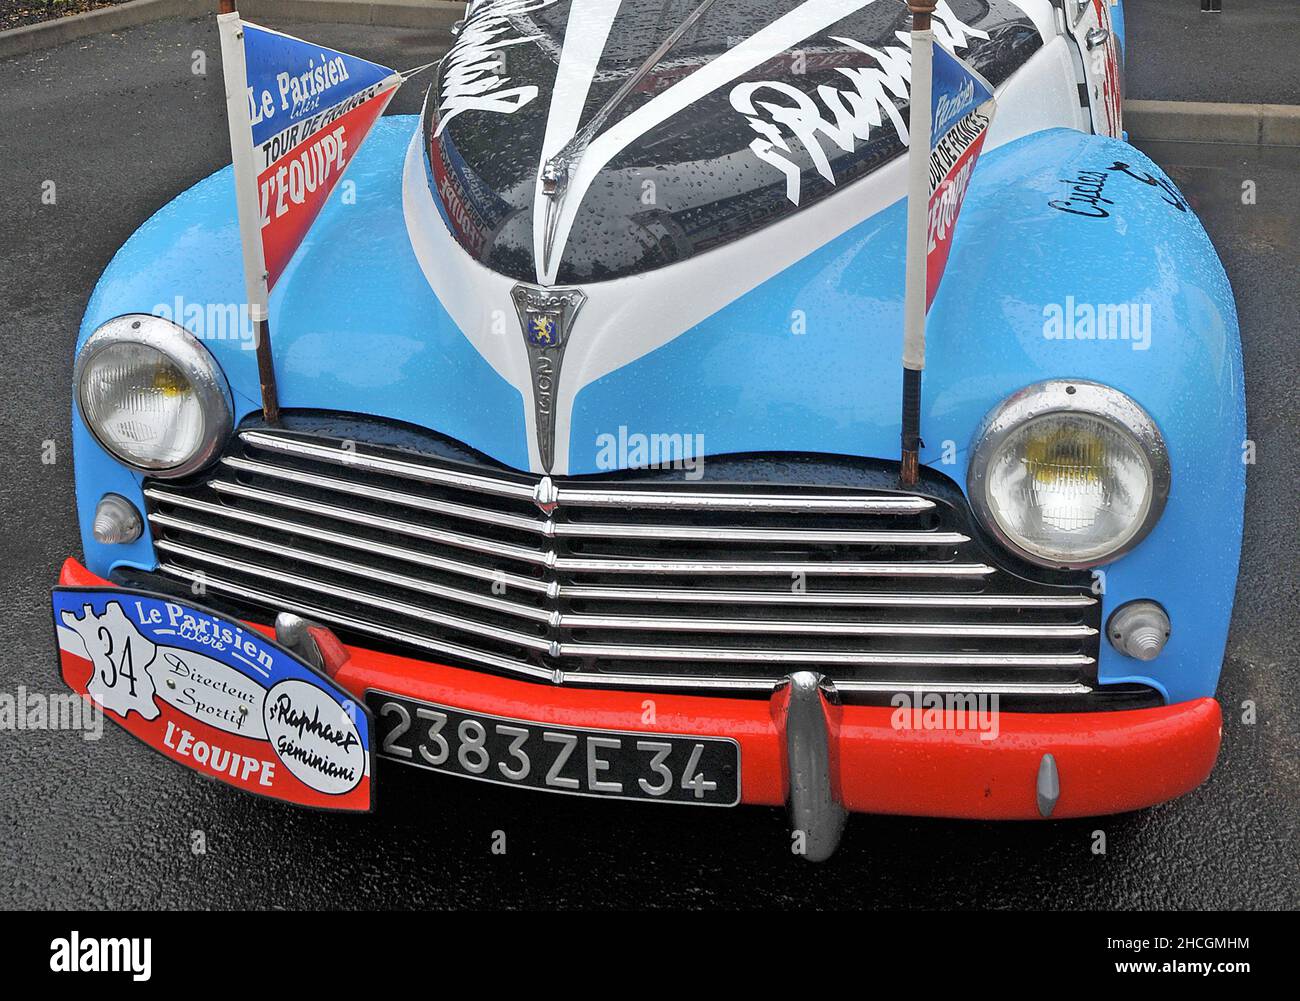 Alter Wagen der Tour de France, Team Saint Raphael Geminiani, Issoire, Frankreich Stockfoto